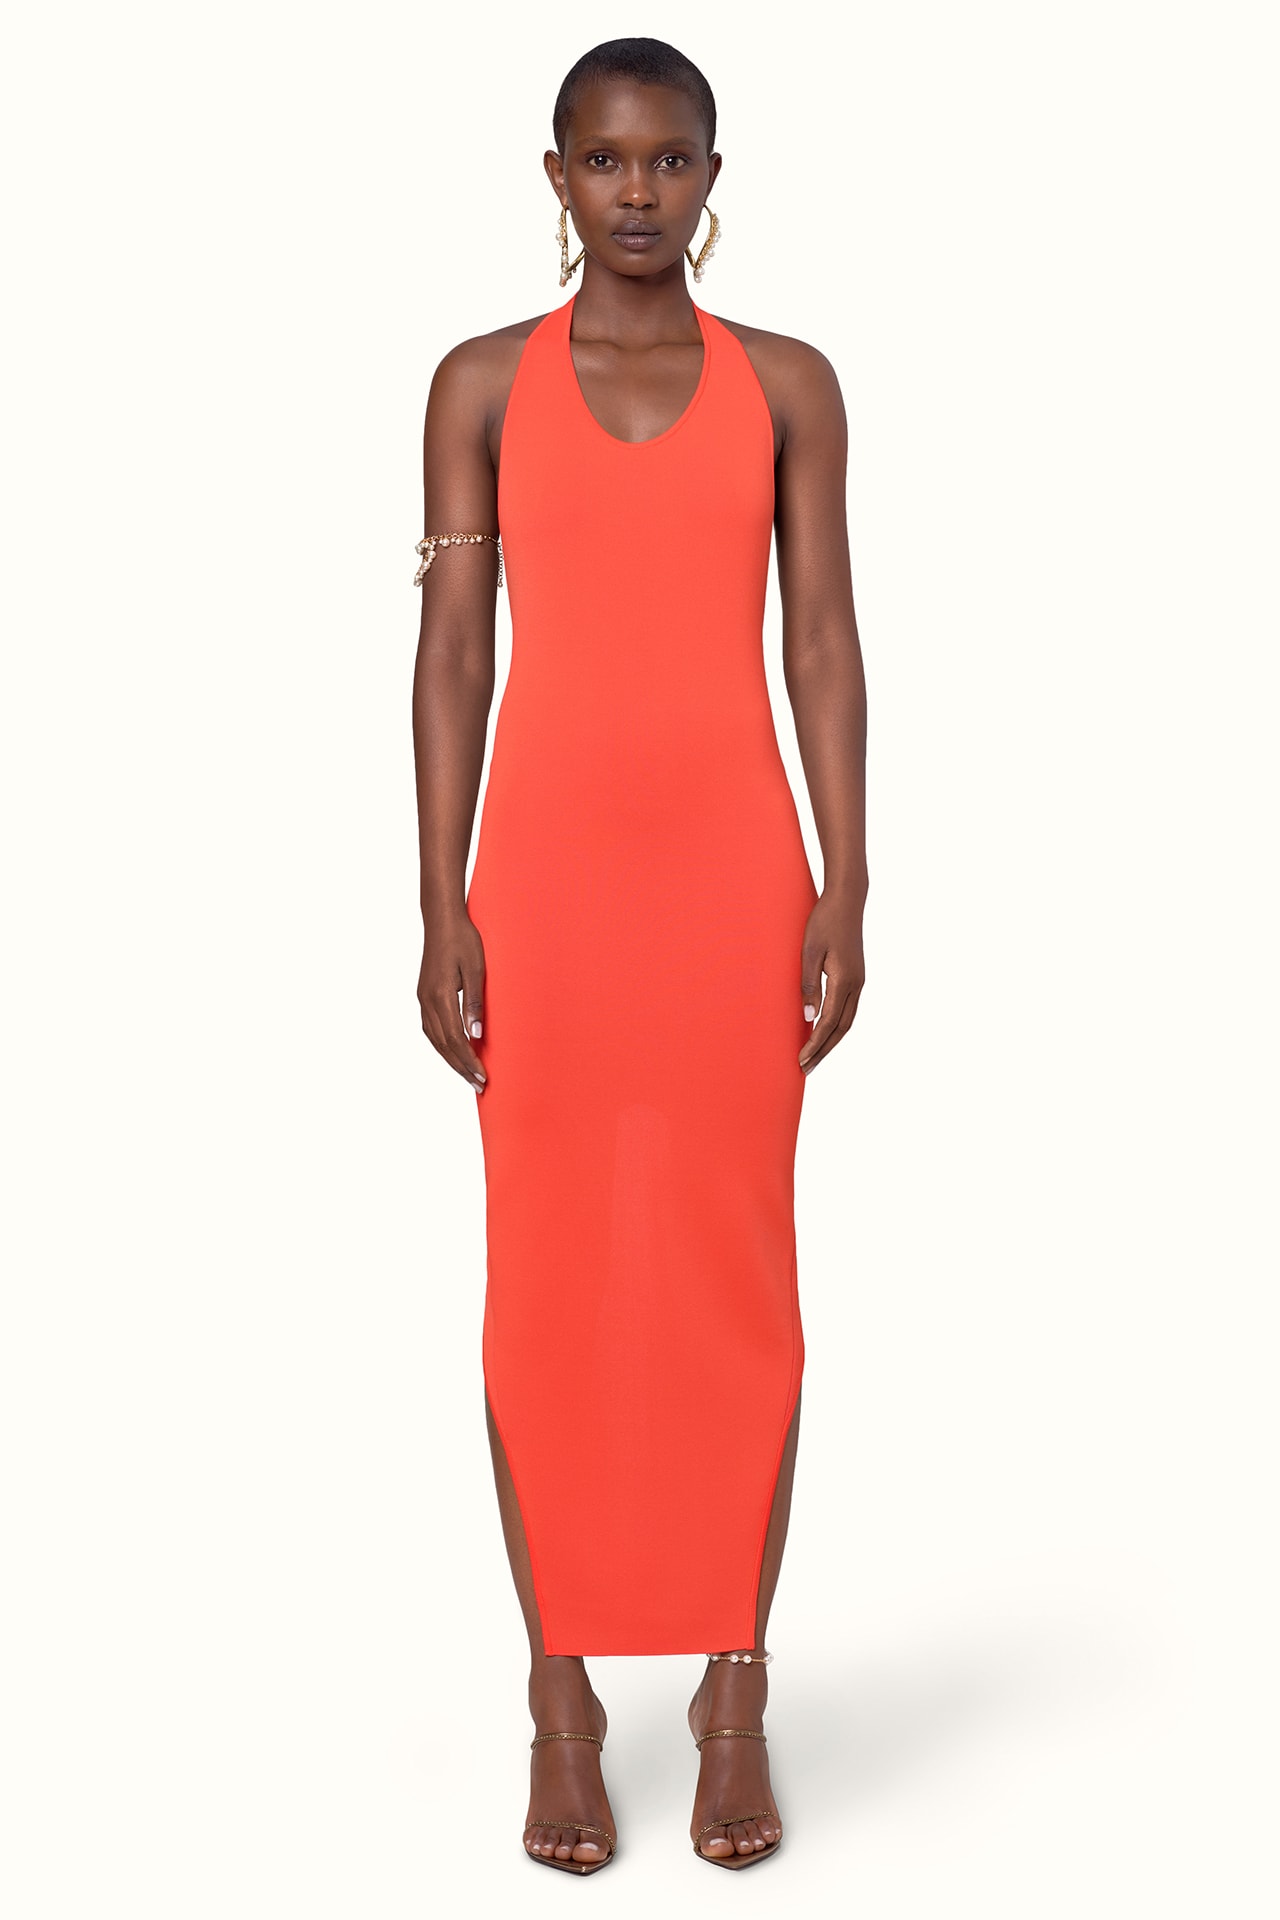 Rihanna Fenty LVMH Luxury Fashion Brand Maison Release 6 19 red orange dress heels sandals